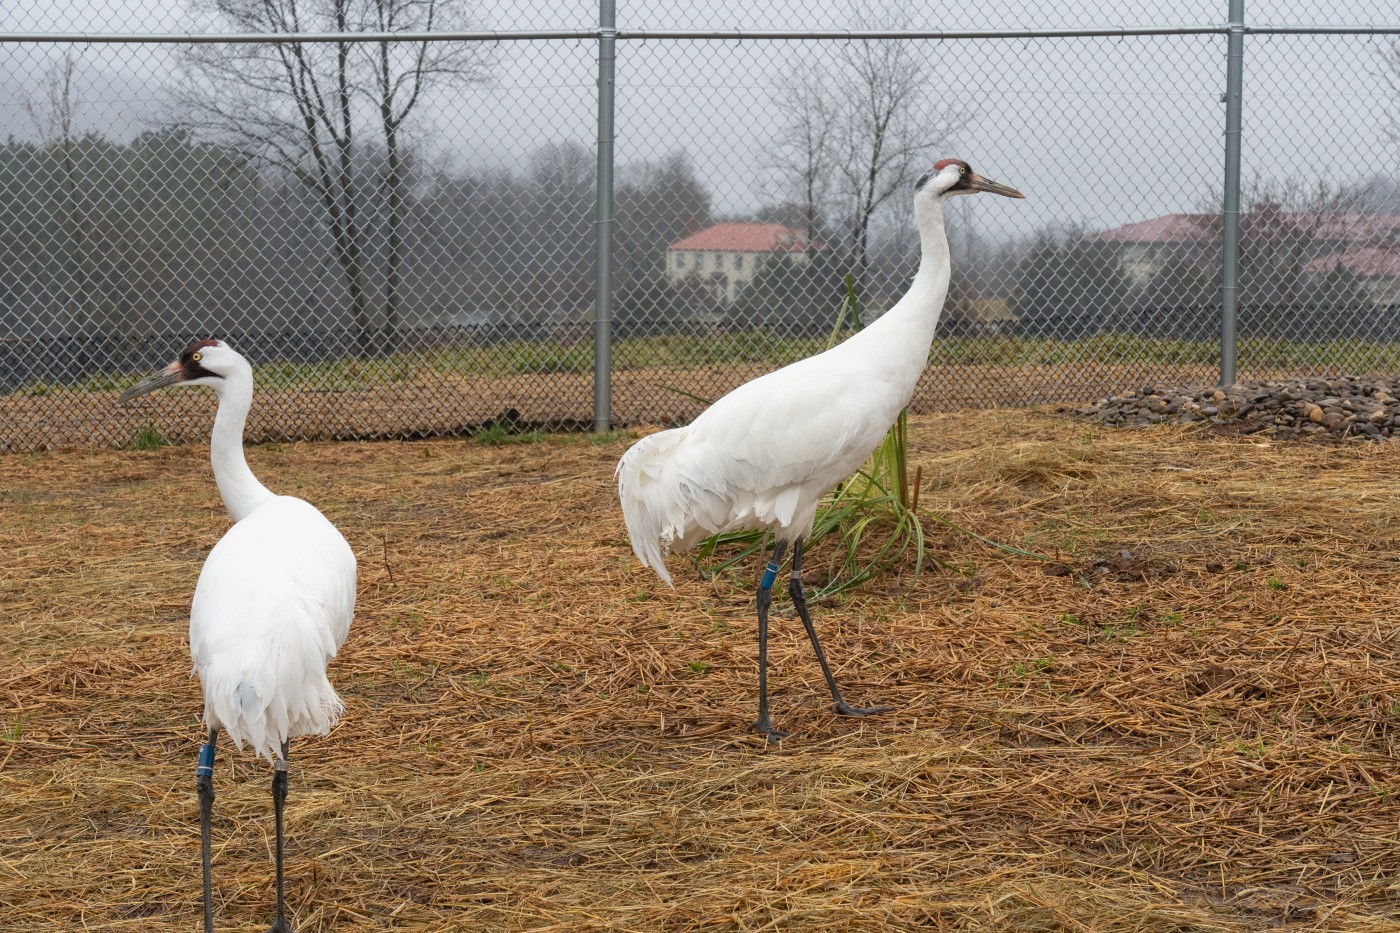 A pair of whooping cranes explore their enclosure at SCBI.